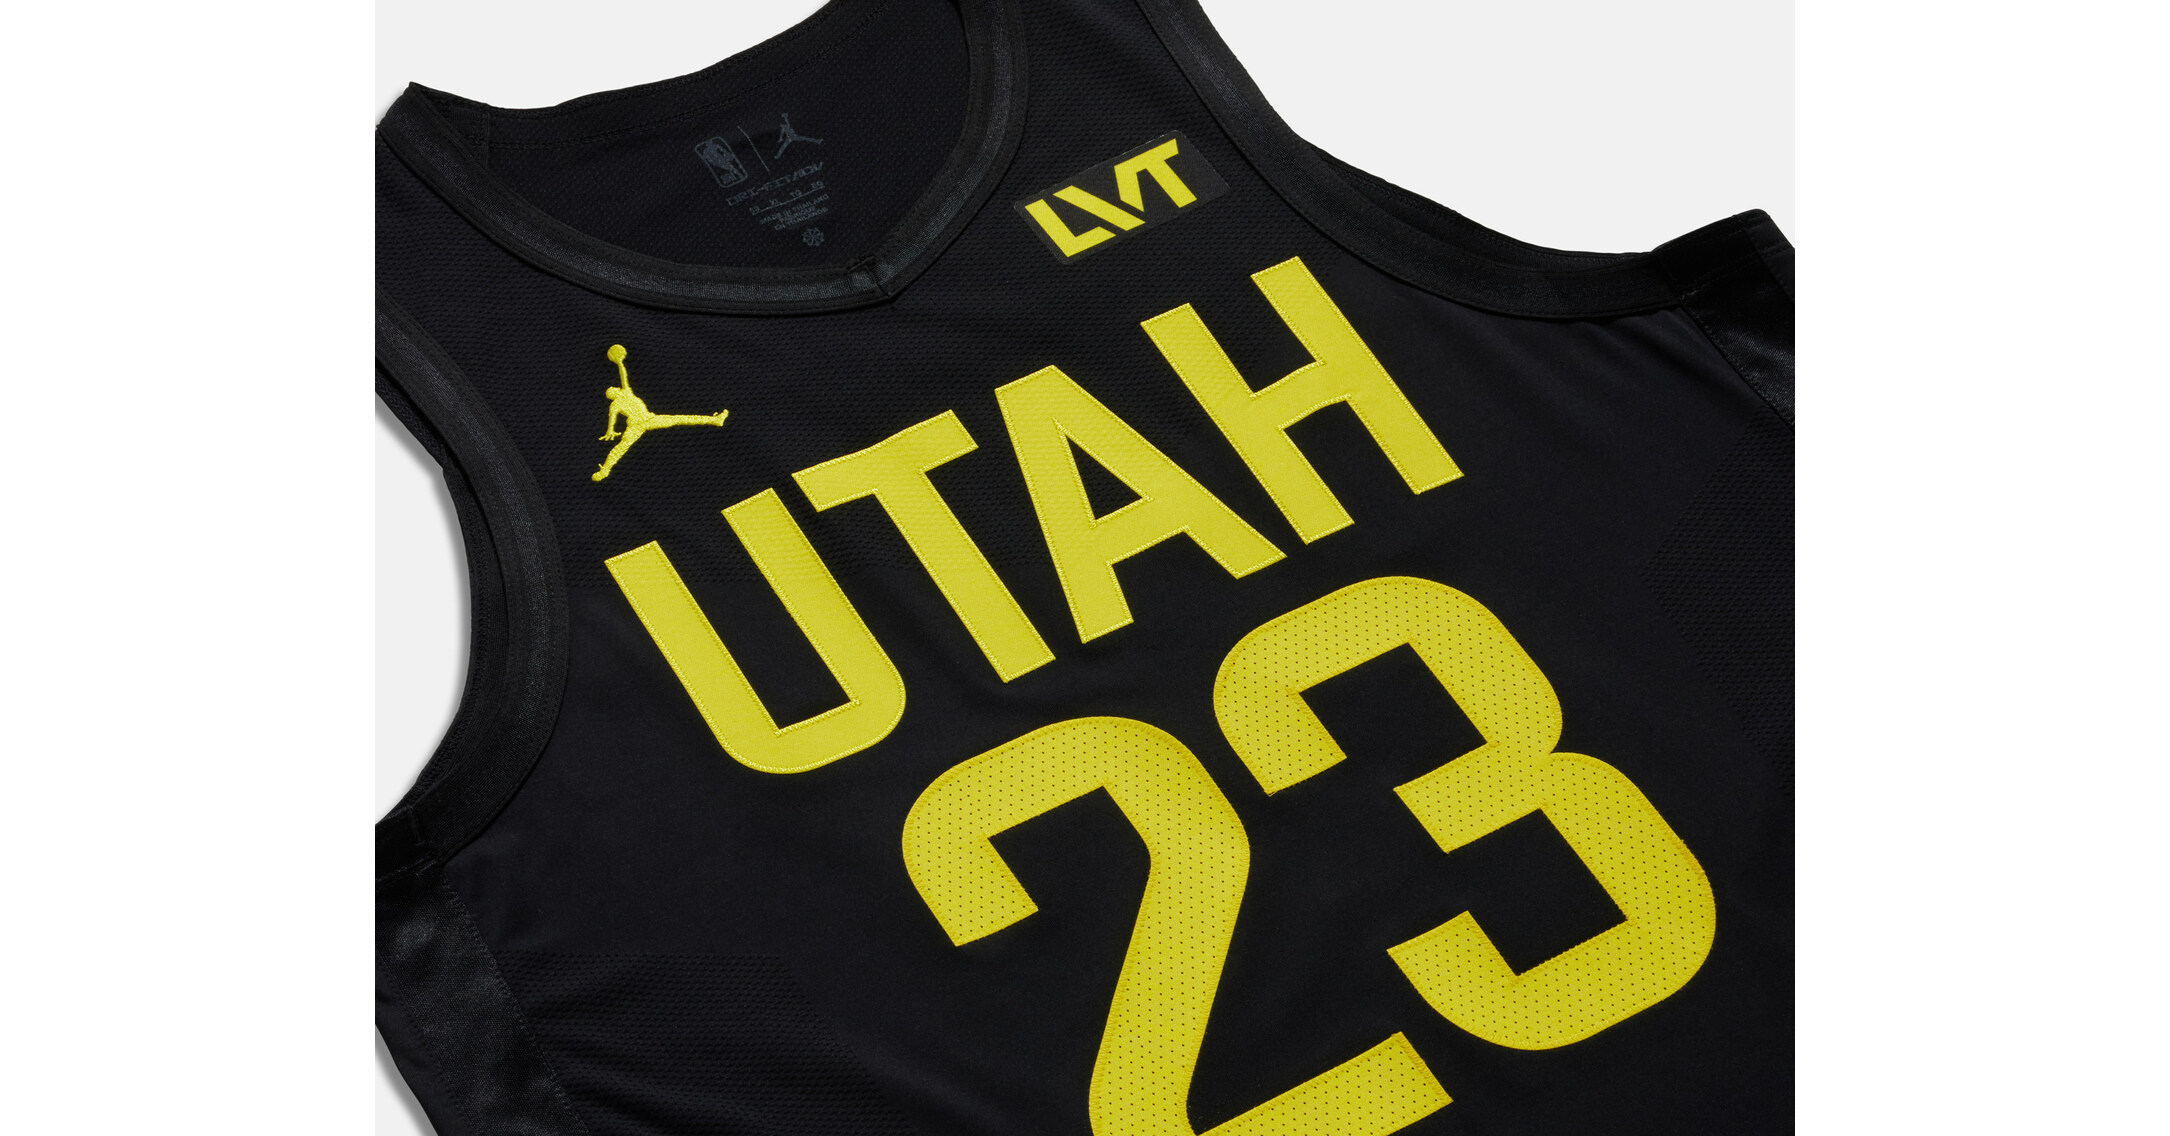 Utah Jazz Alternate Uniform - National Basketball Association (NBA